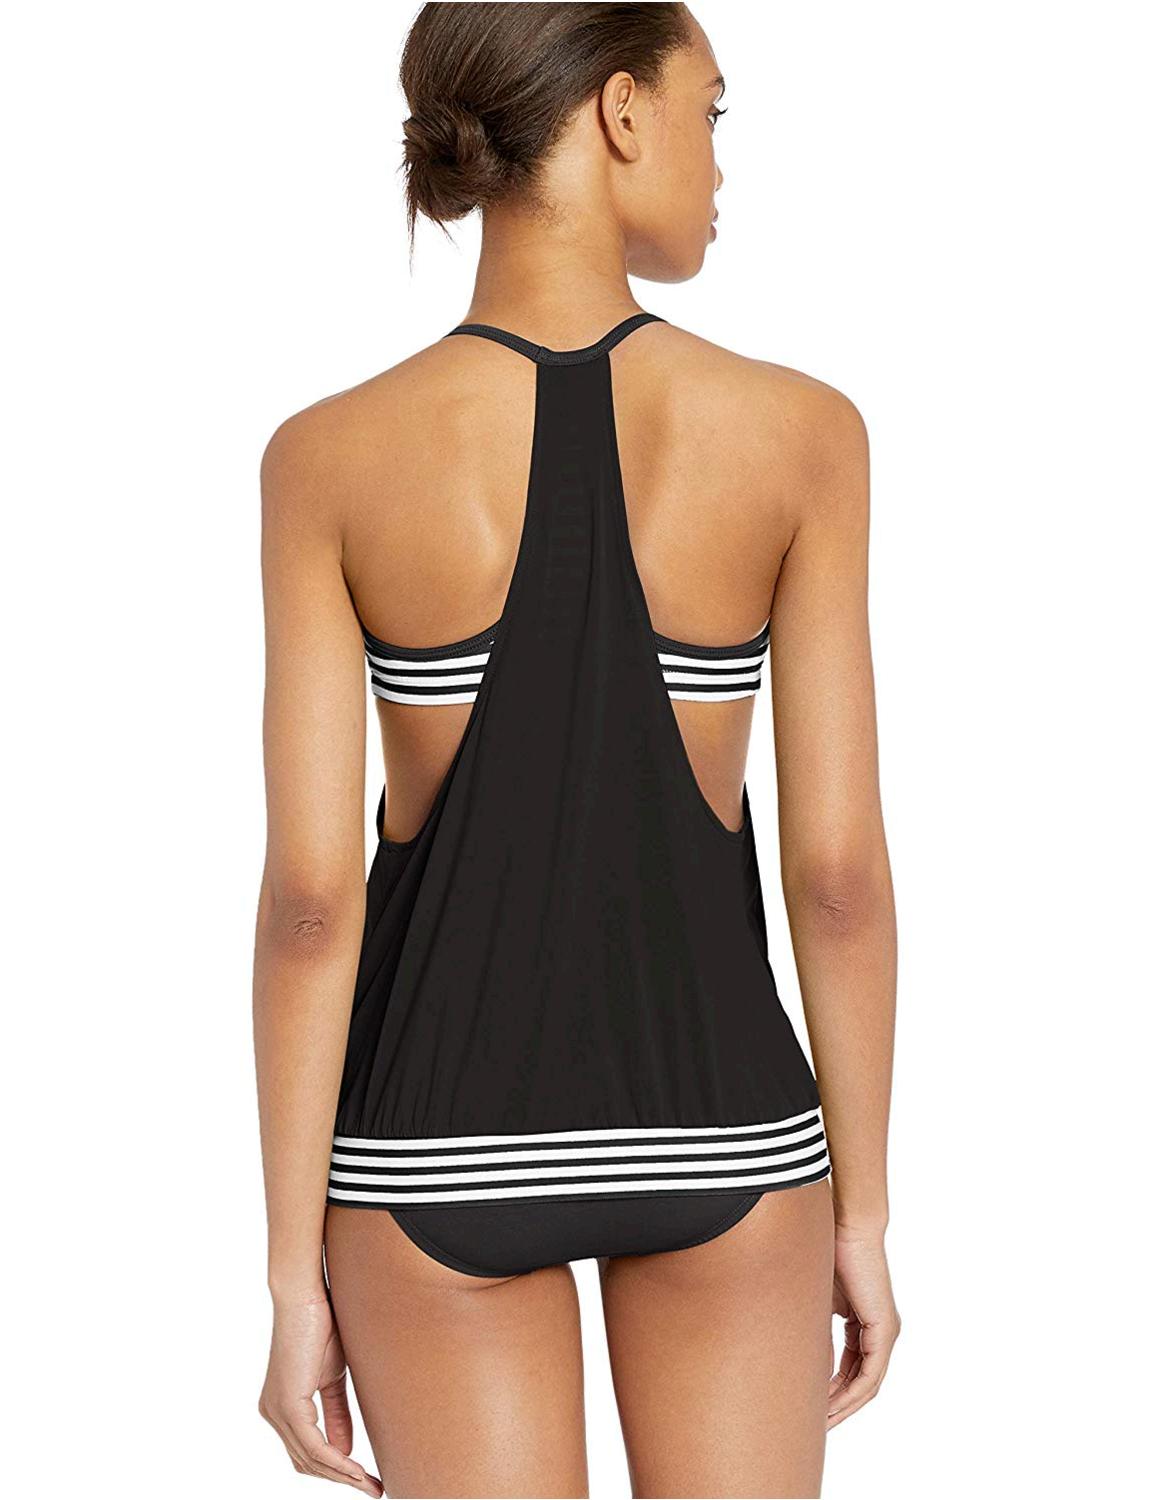 Nike Swim Women S Layered Sport Tankini Swimsuit Set Black Black Size Small G Ebay